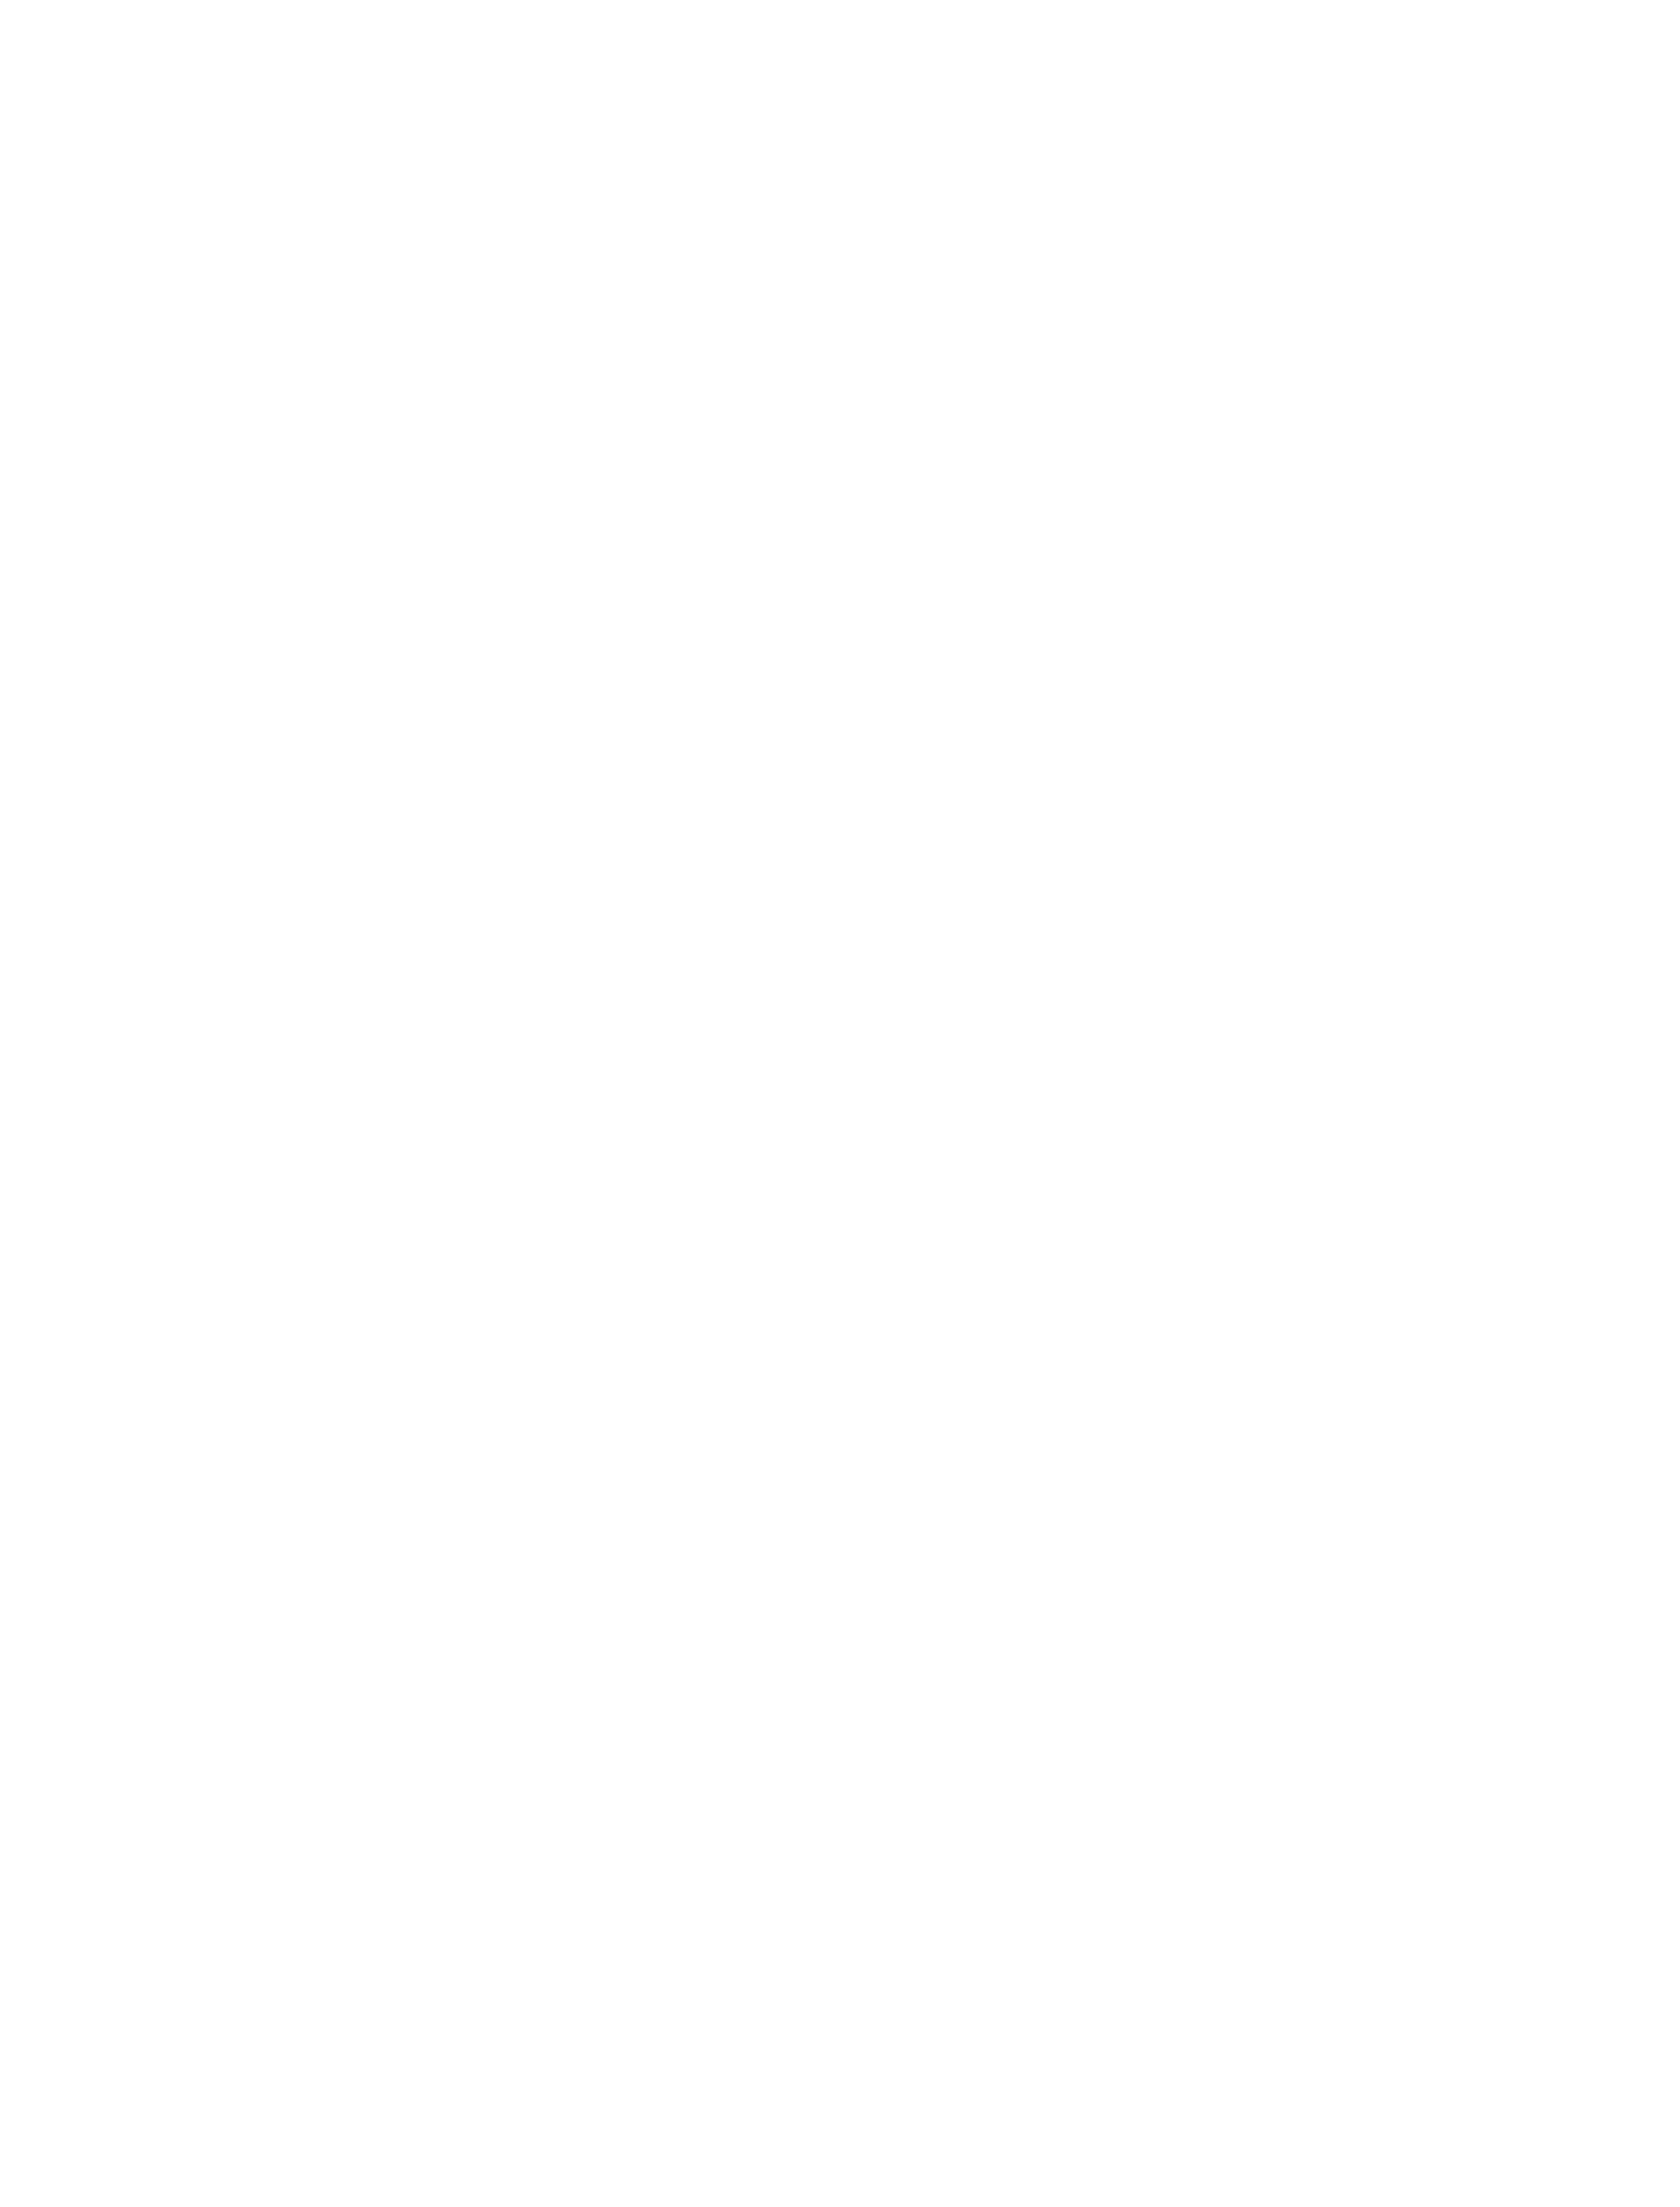 Arkham Asylum | Batman: Anarky Wiki | Fandom